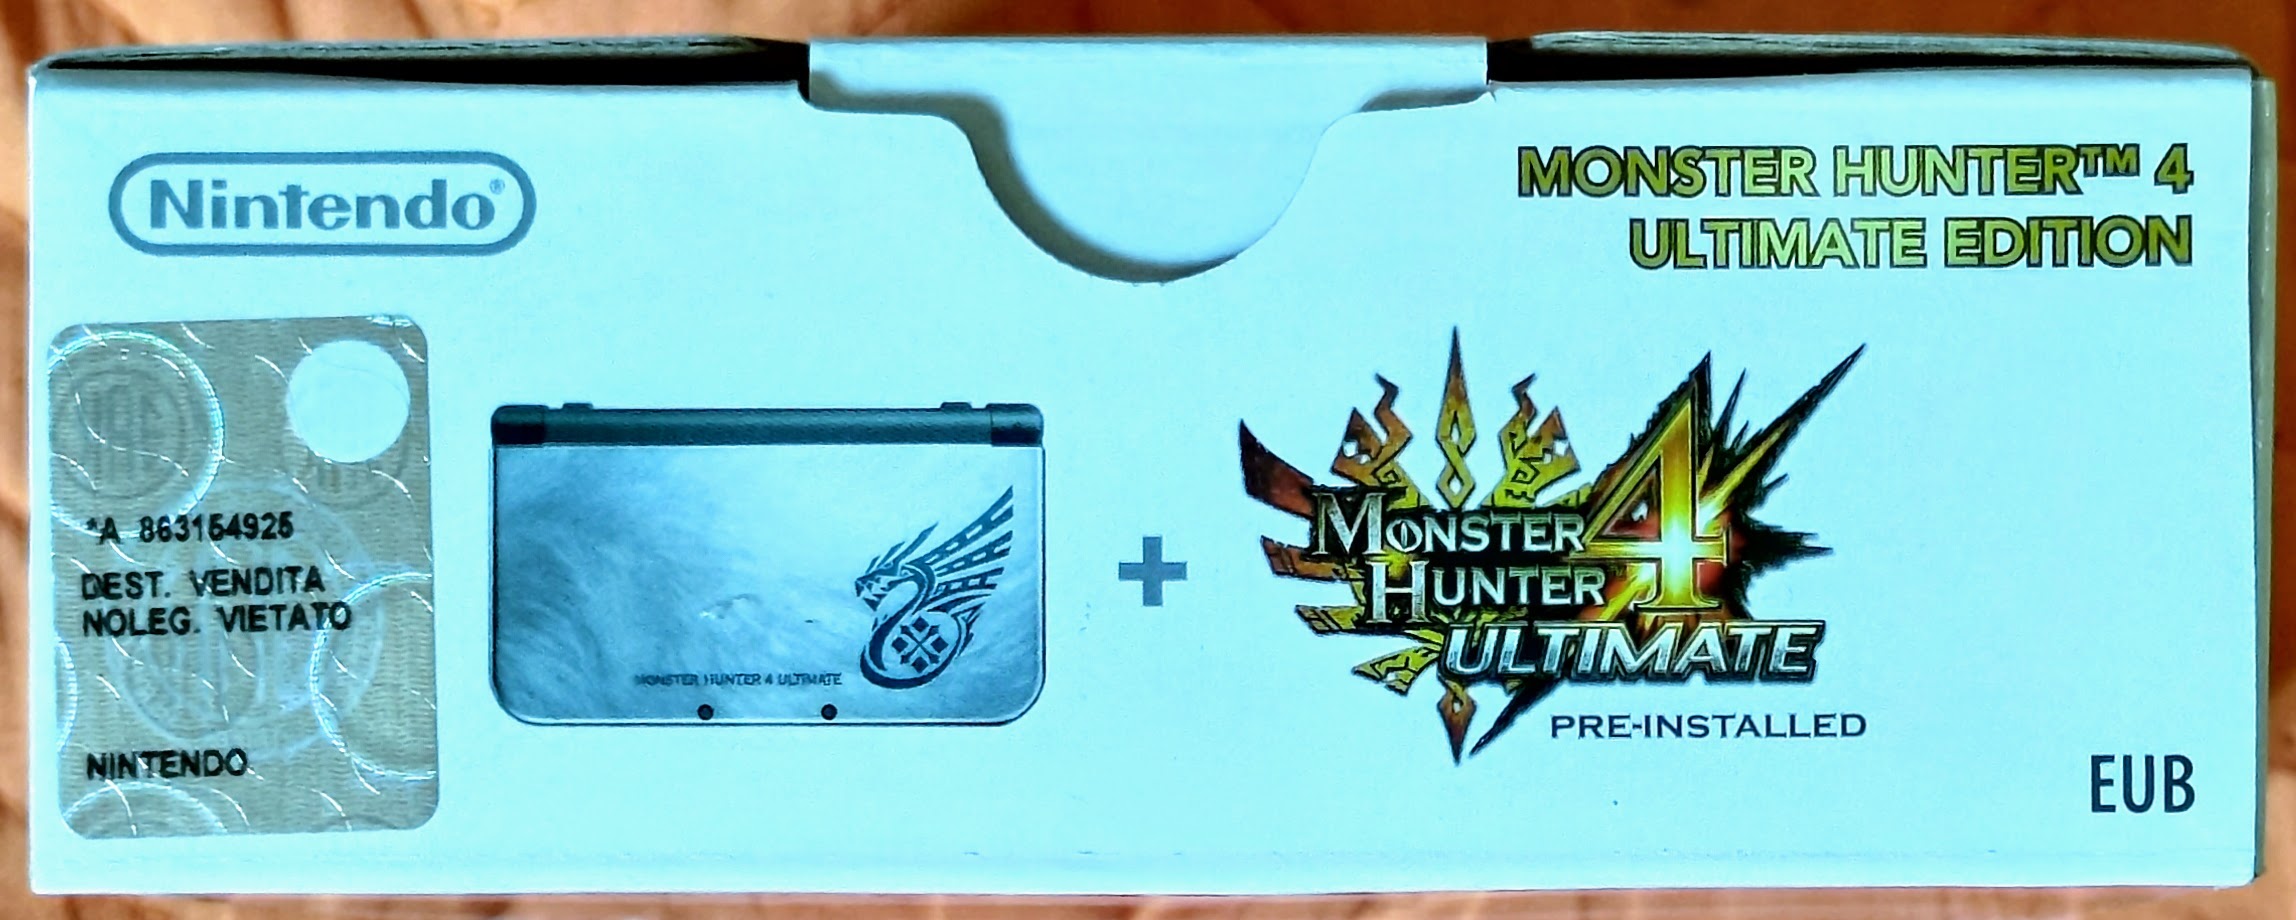 New Nintendo 3DS XL "Monster Hunter 4 Ultimate Edition", vista lato 2